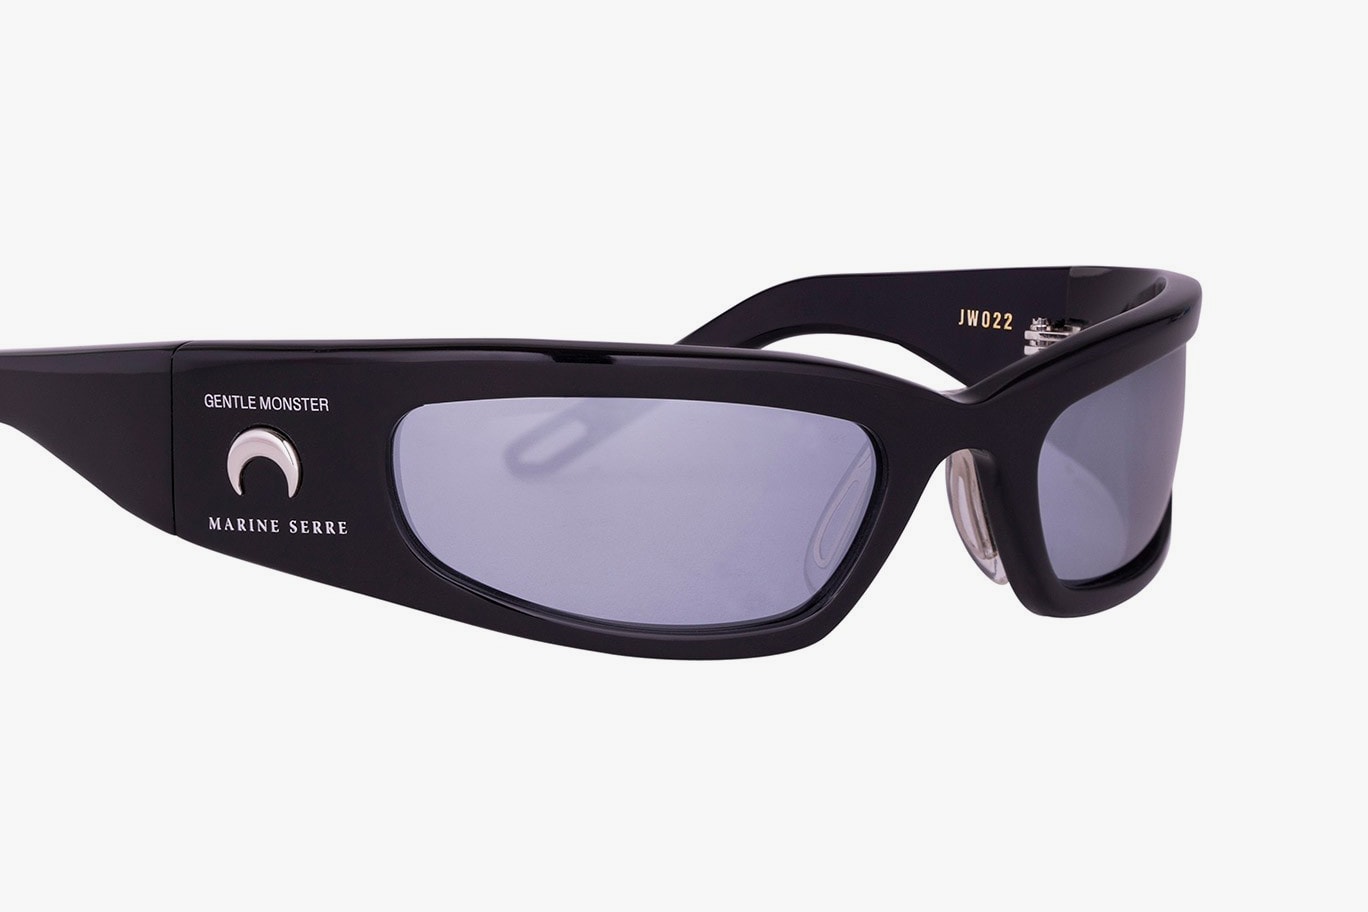 Marine Serre x Gentle Monster Sunglasses Collaboration Spring/Summer 2021 Collection VISIONIZER II Black